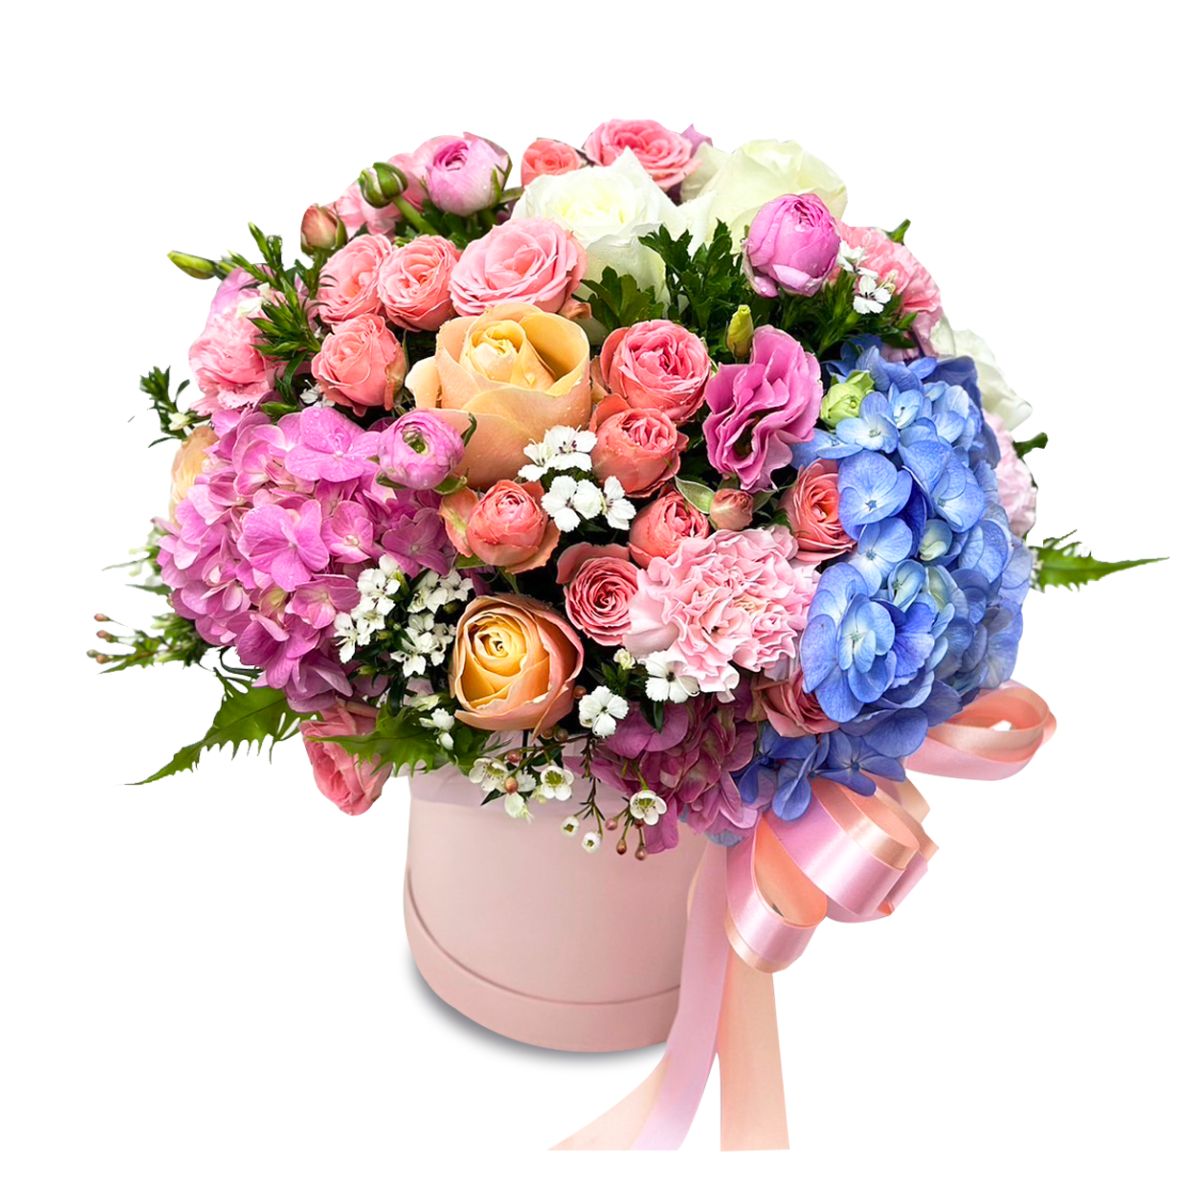 "My Fair Lady" Flower Box